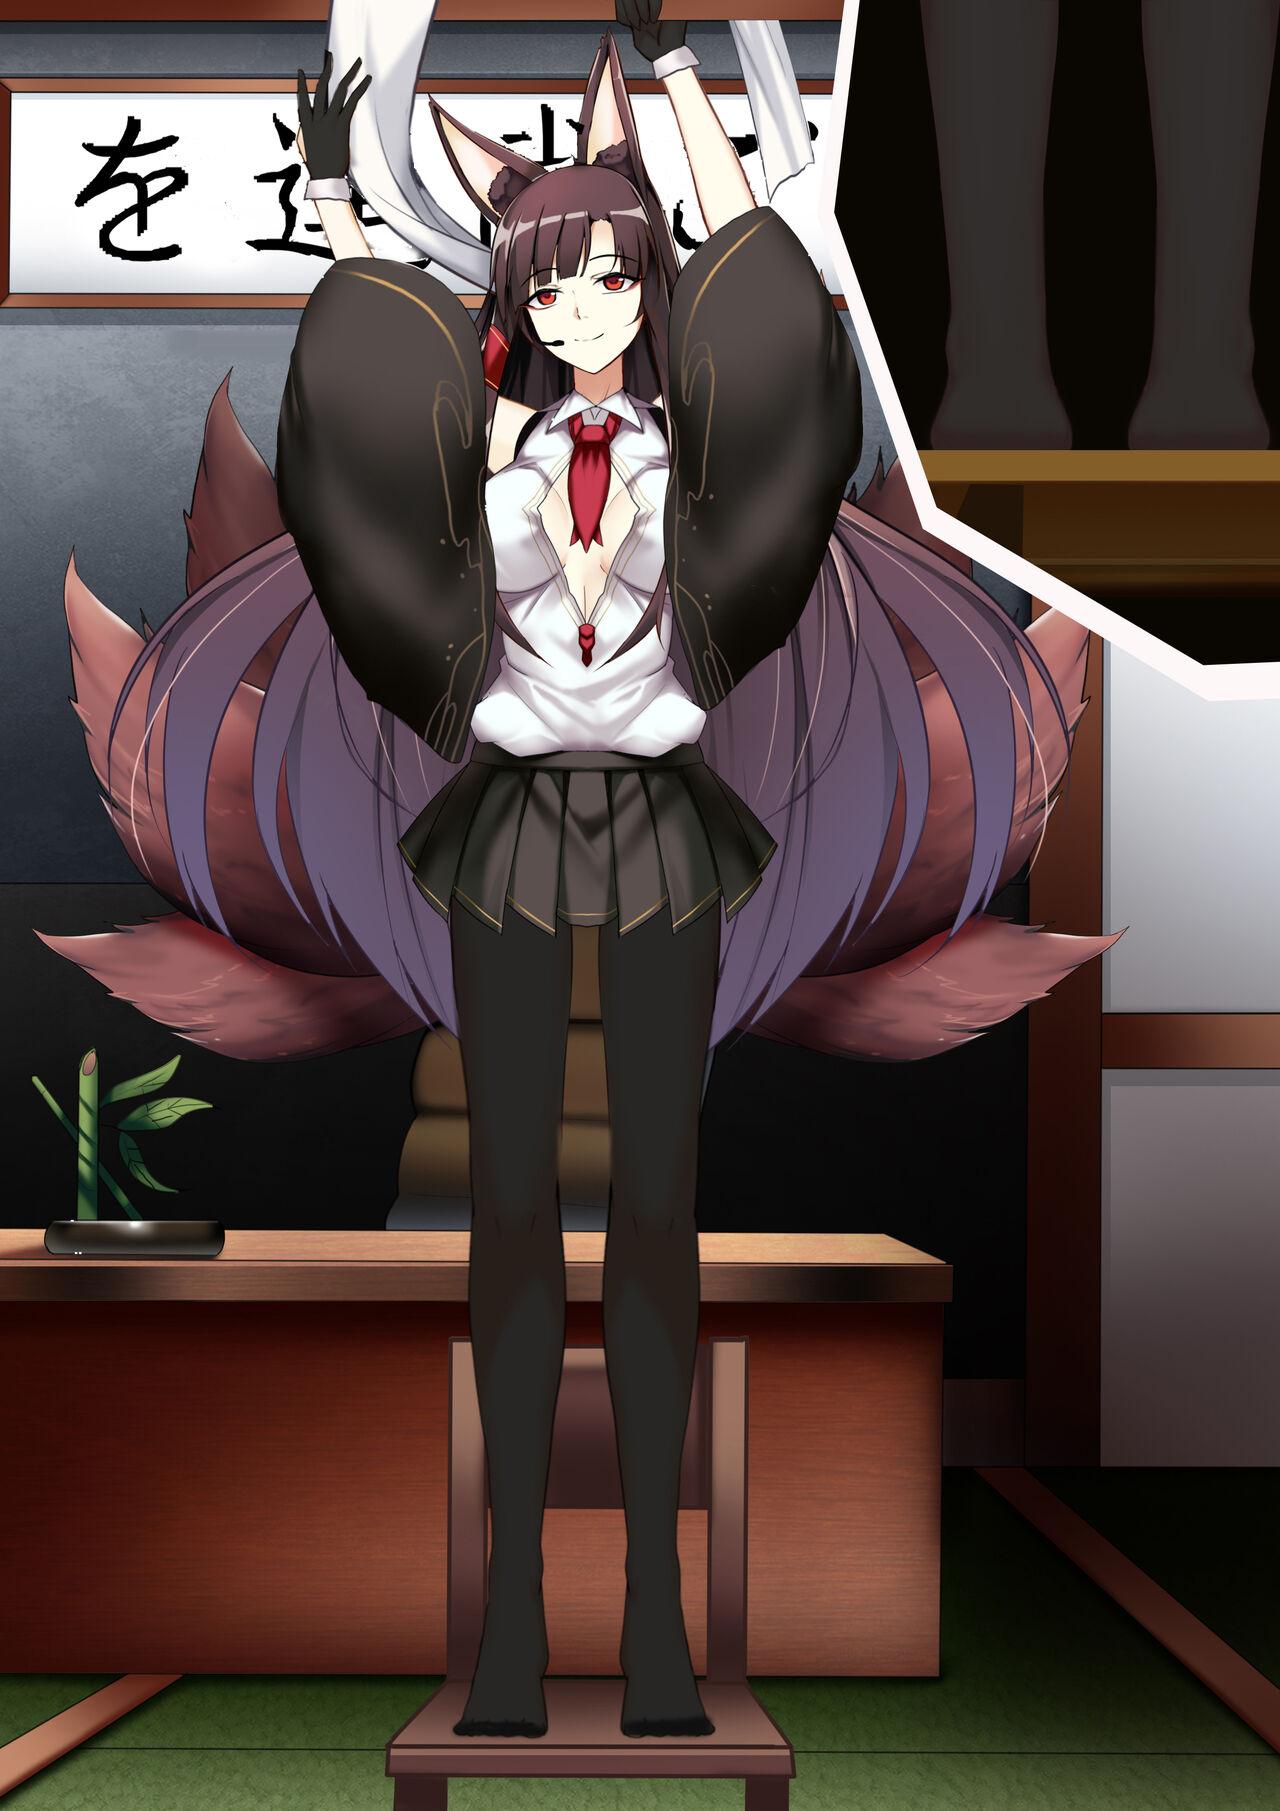 Akagi hanged herself in her office 26